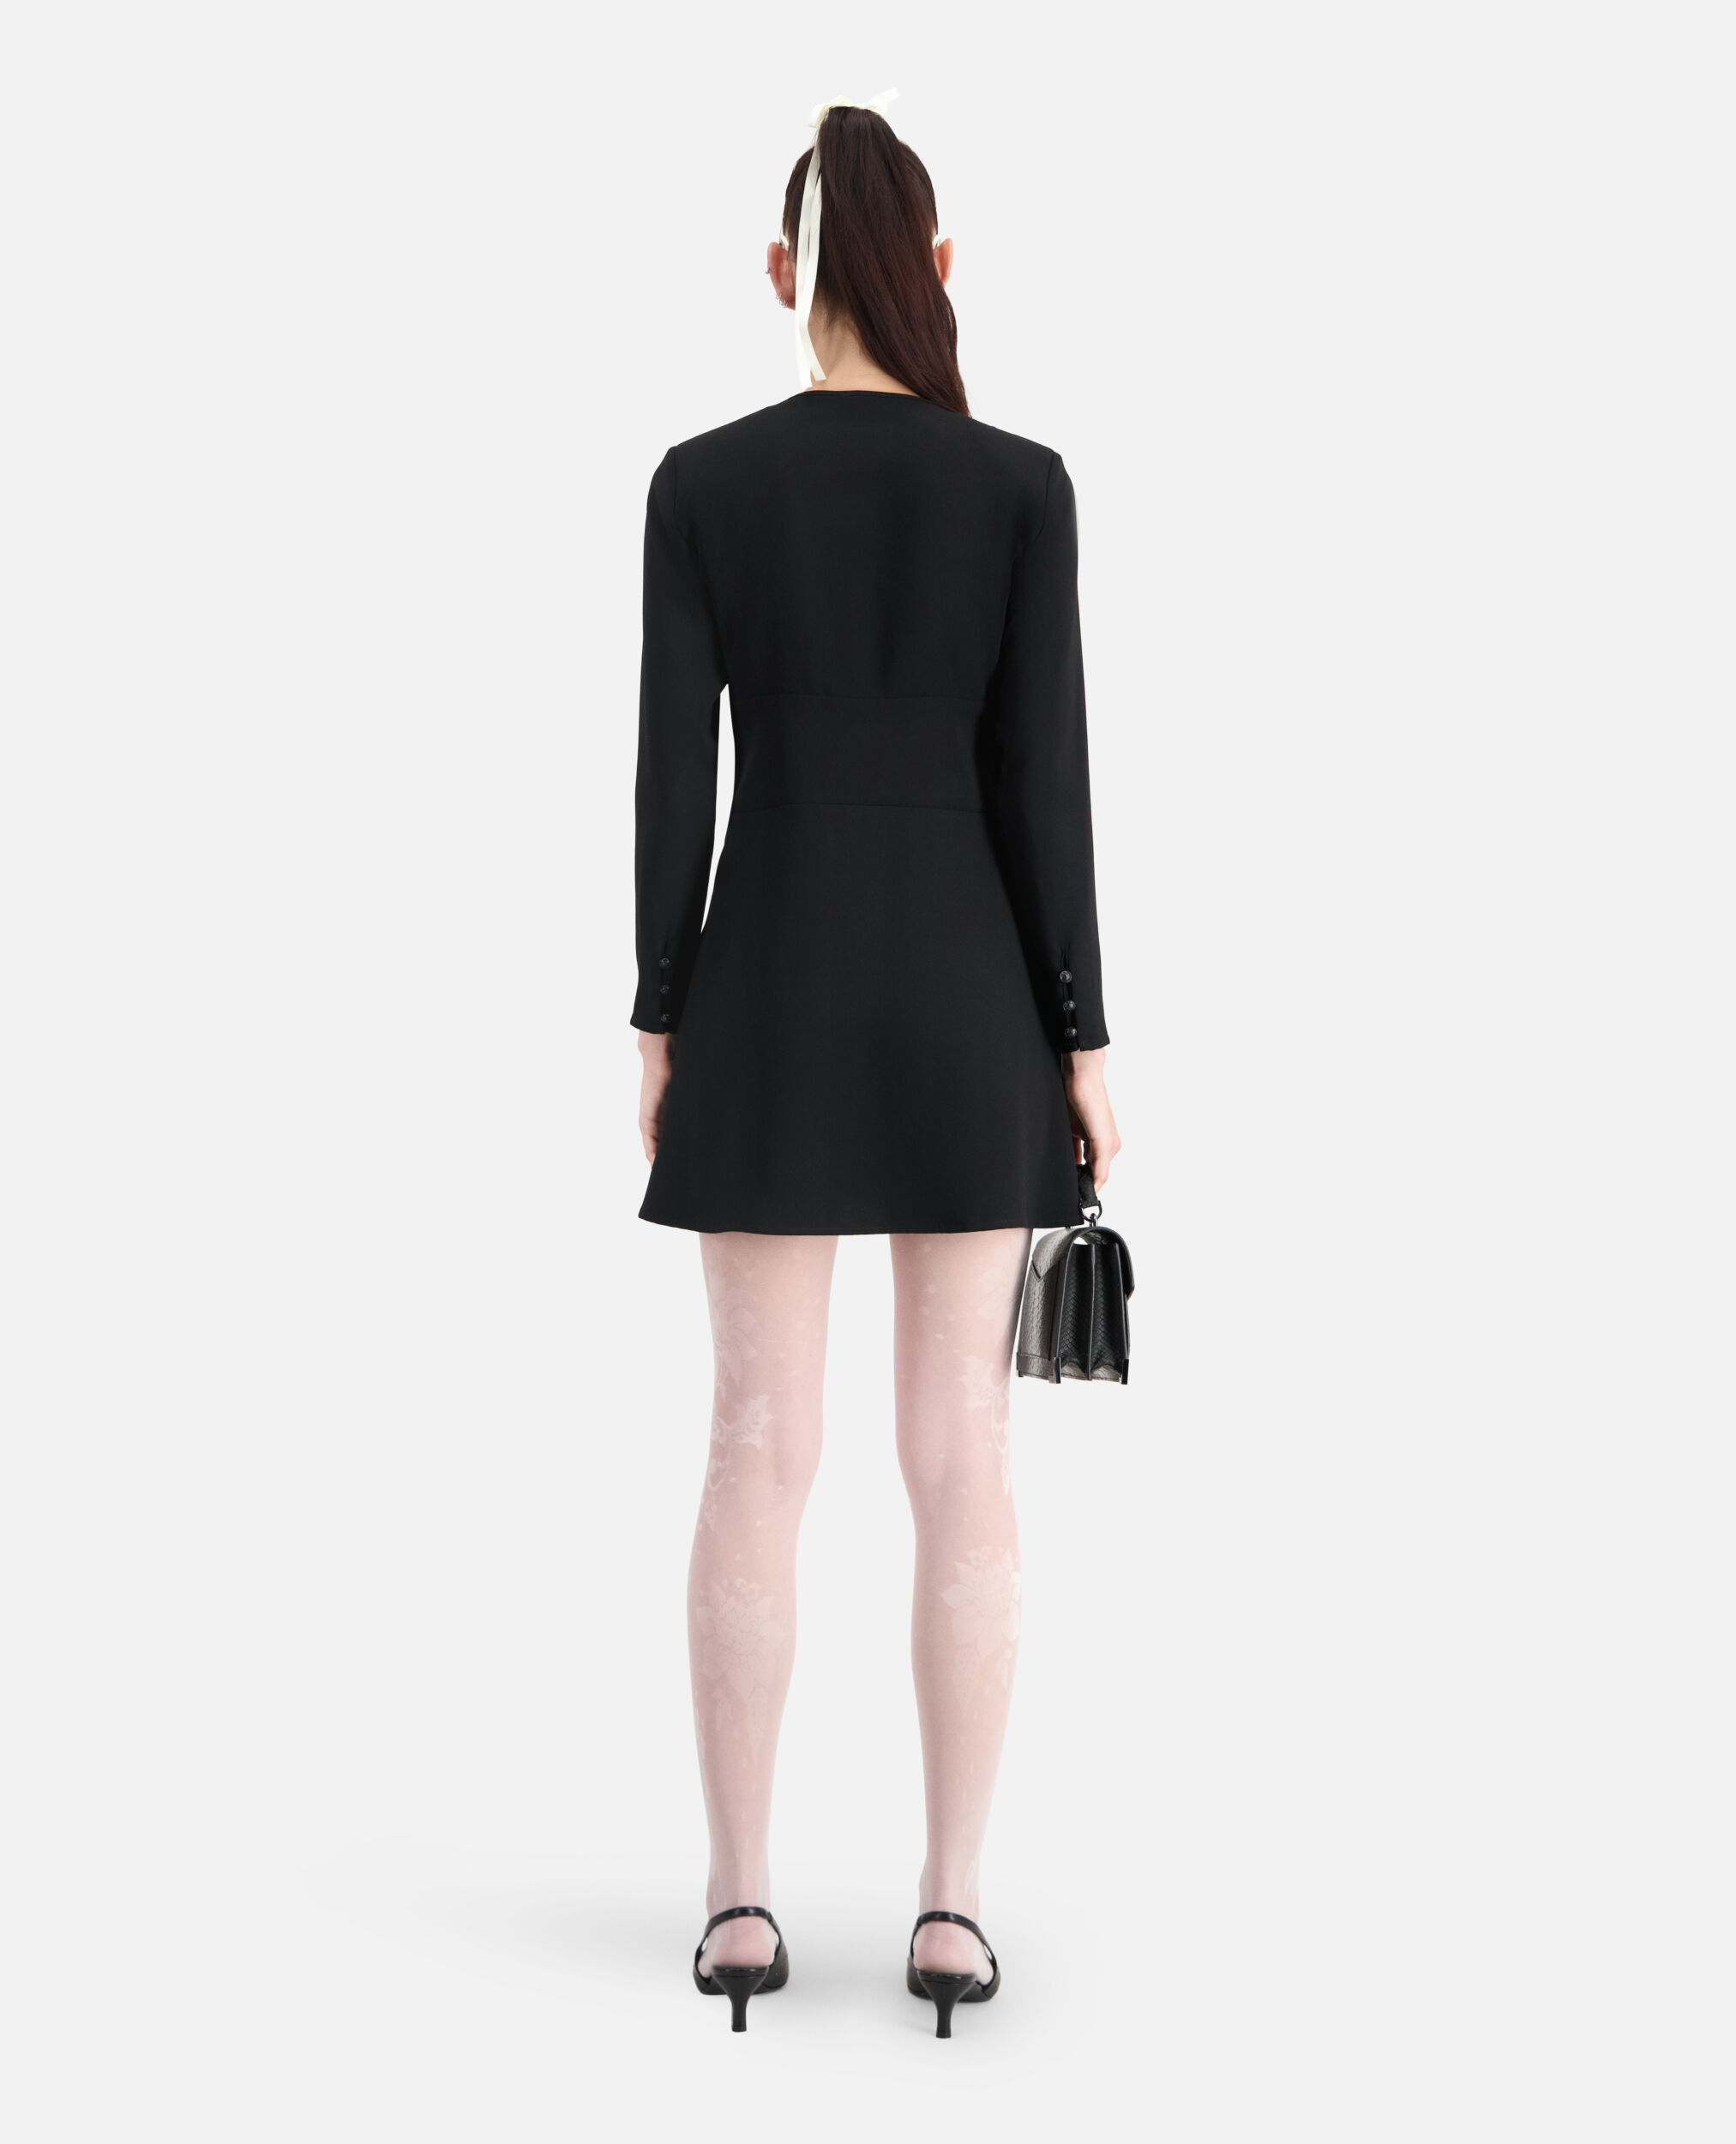 Short black crepe dress